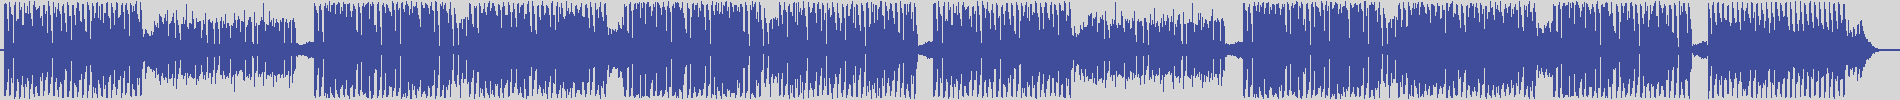 nf_boyz_records [NFY053] Fantobeats - Leaving Home [Capturing Mix] audio wave form